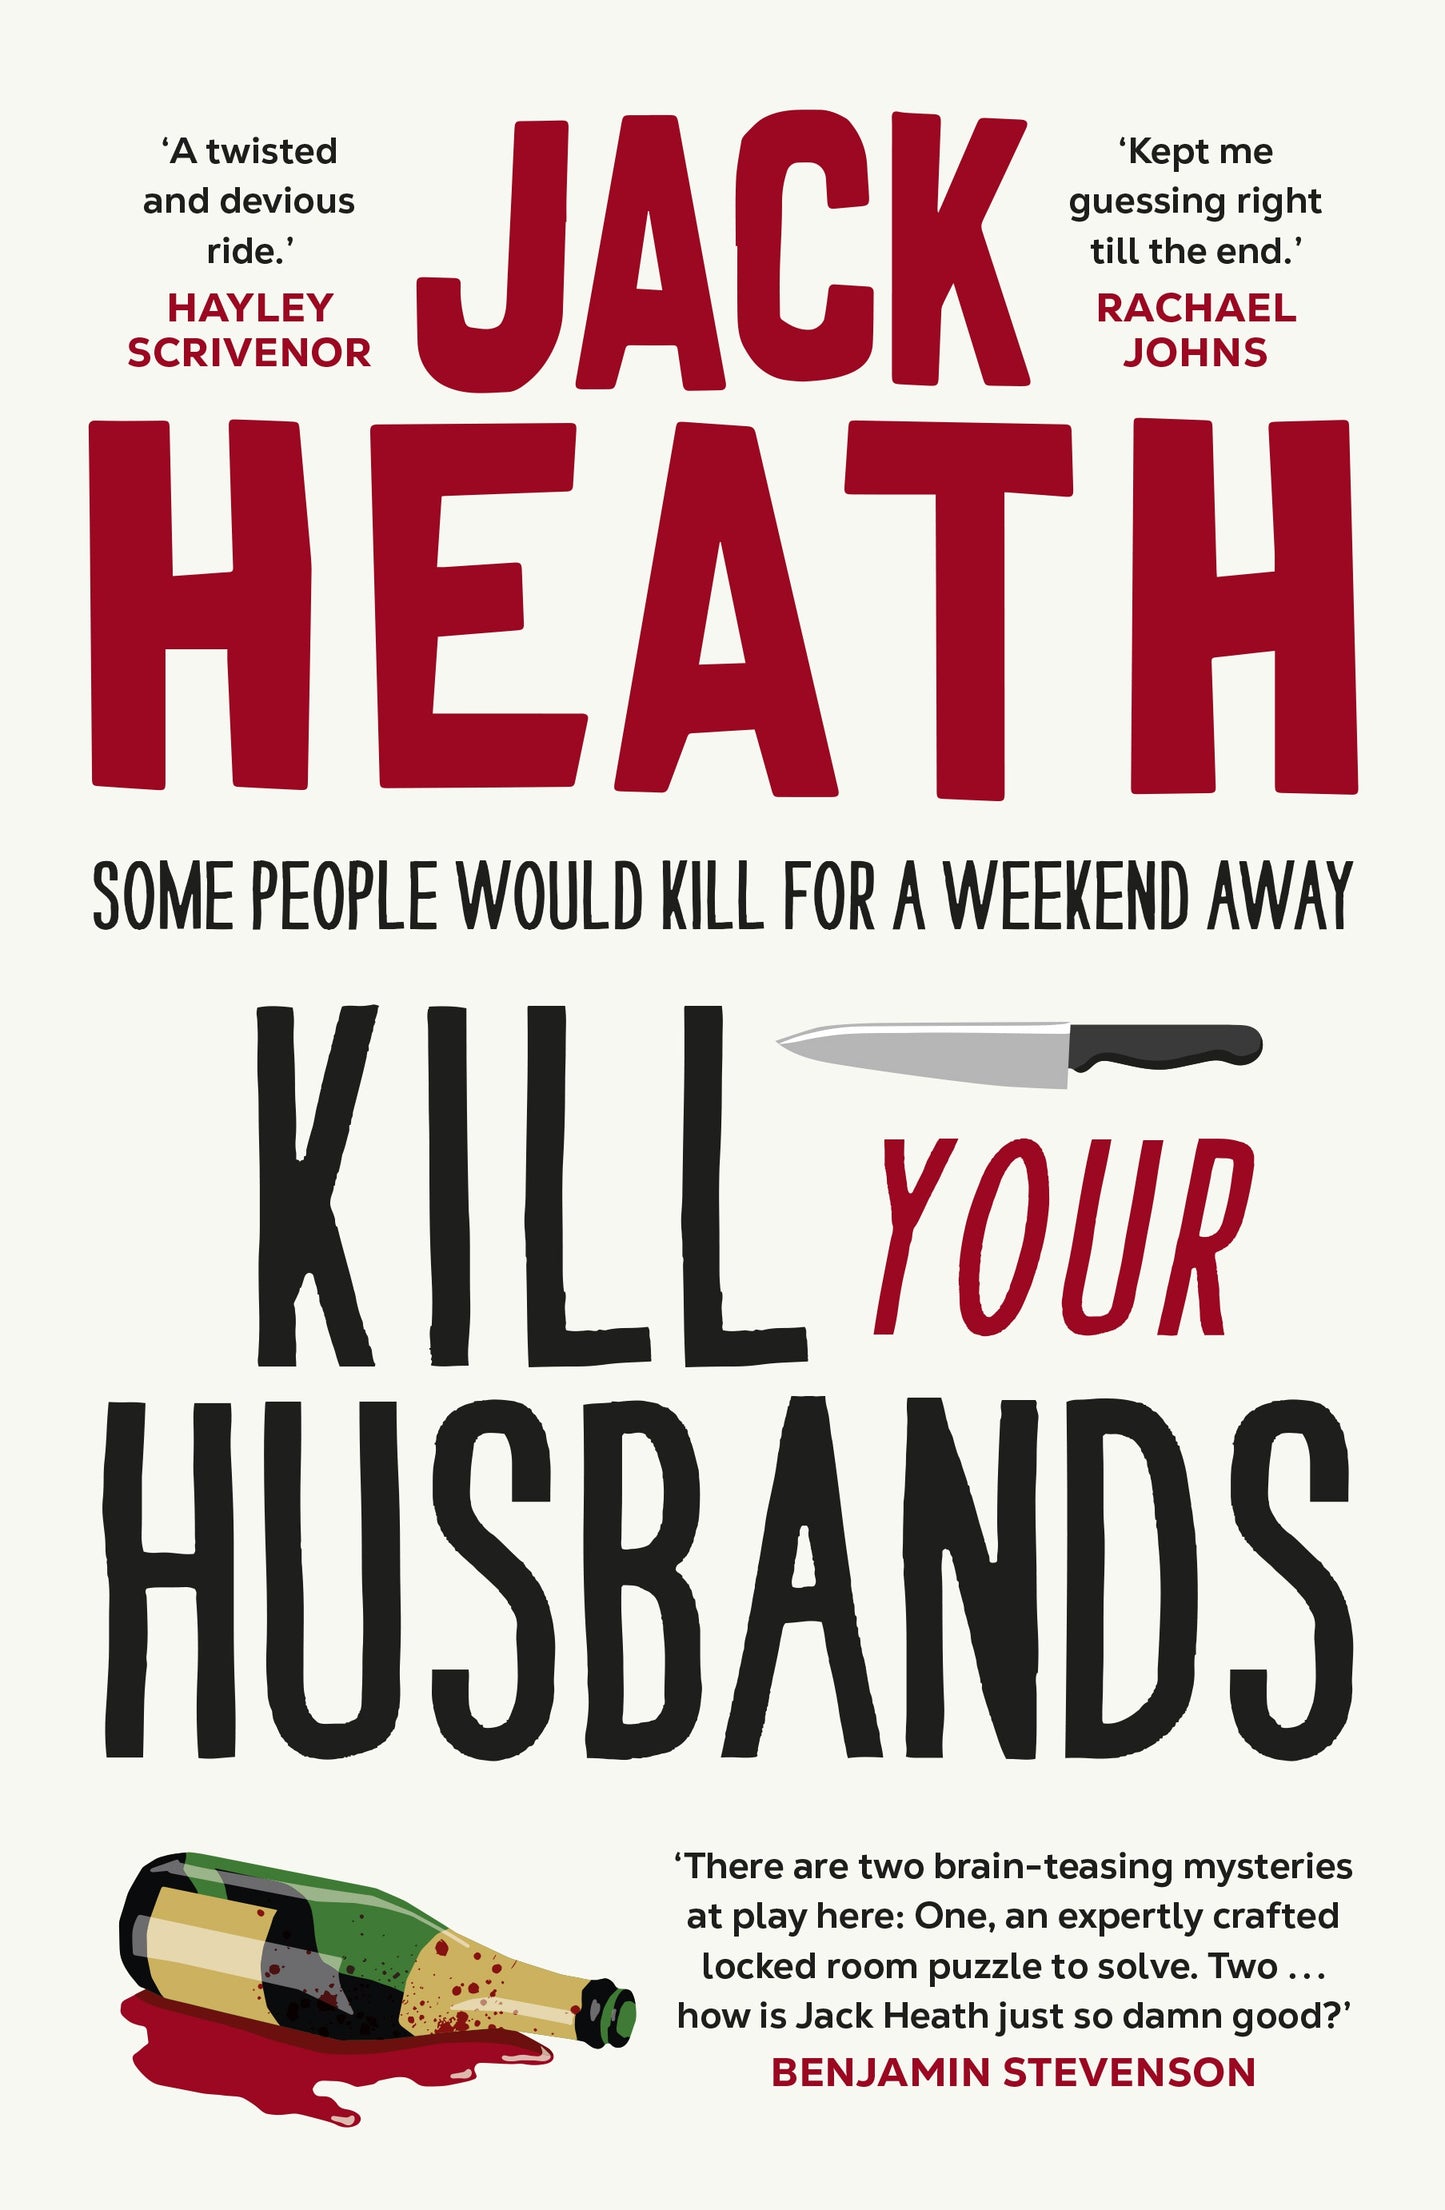 Kill Your Husbands by Jack Heath